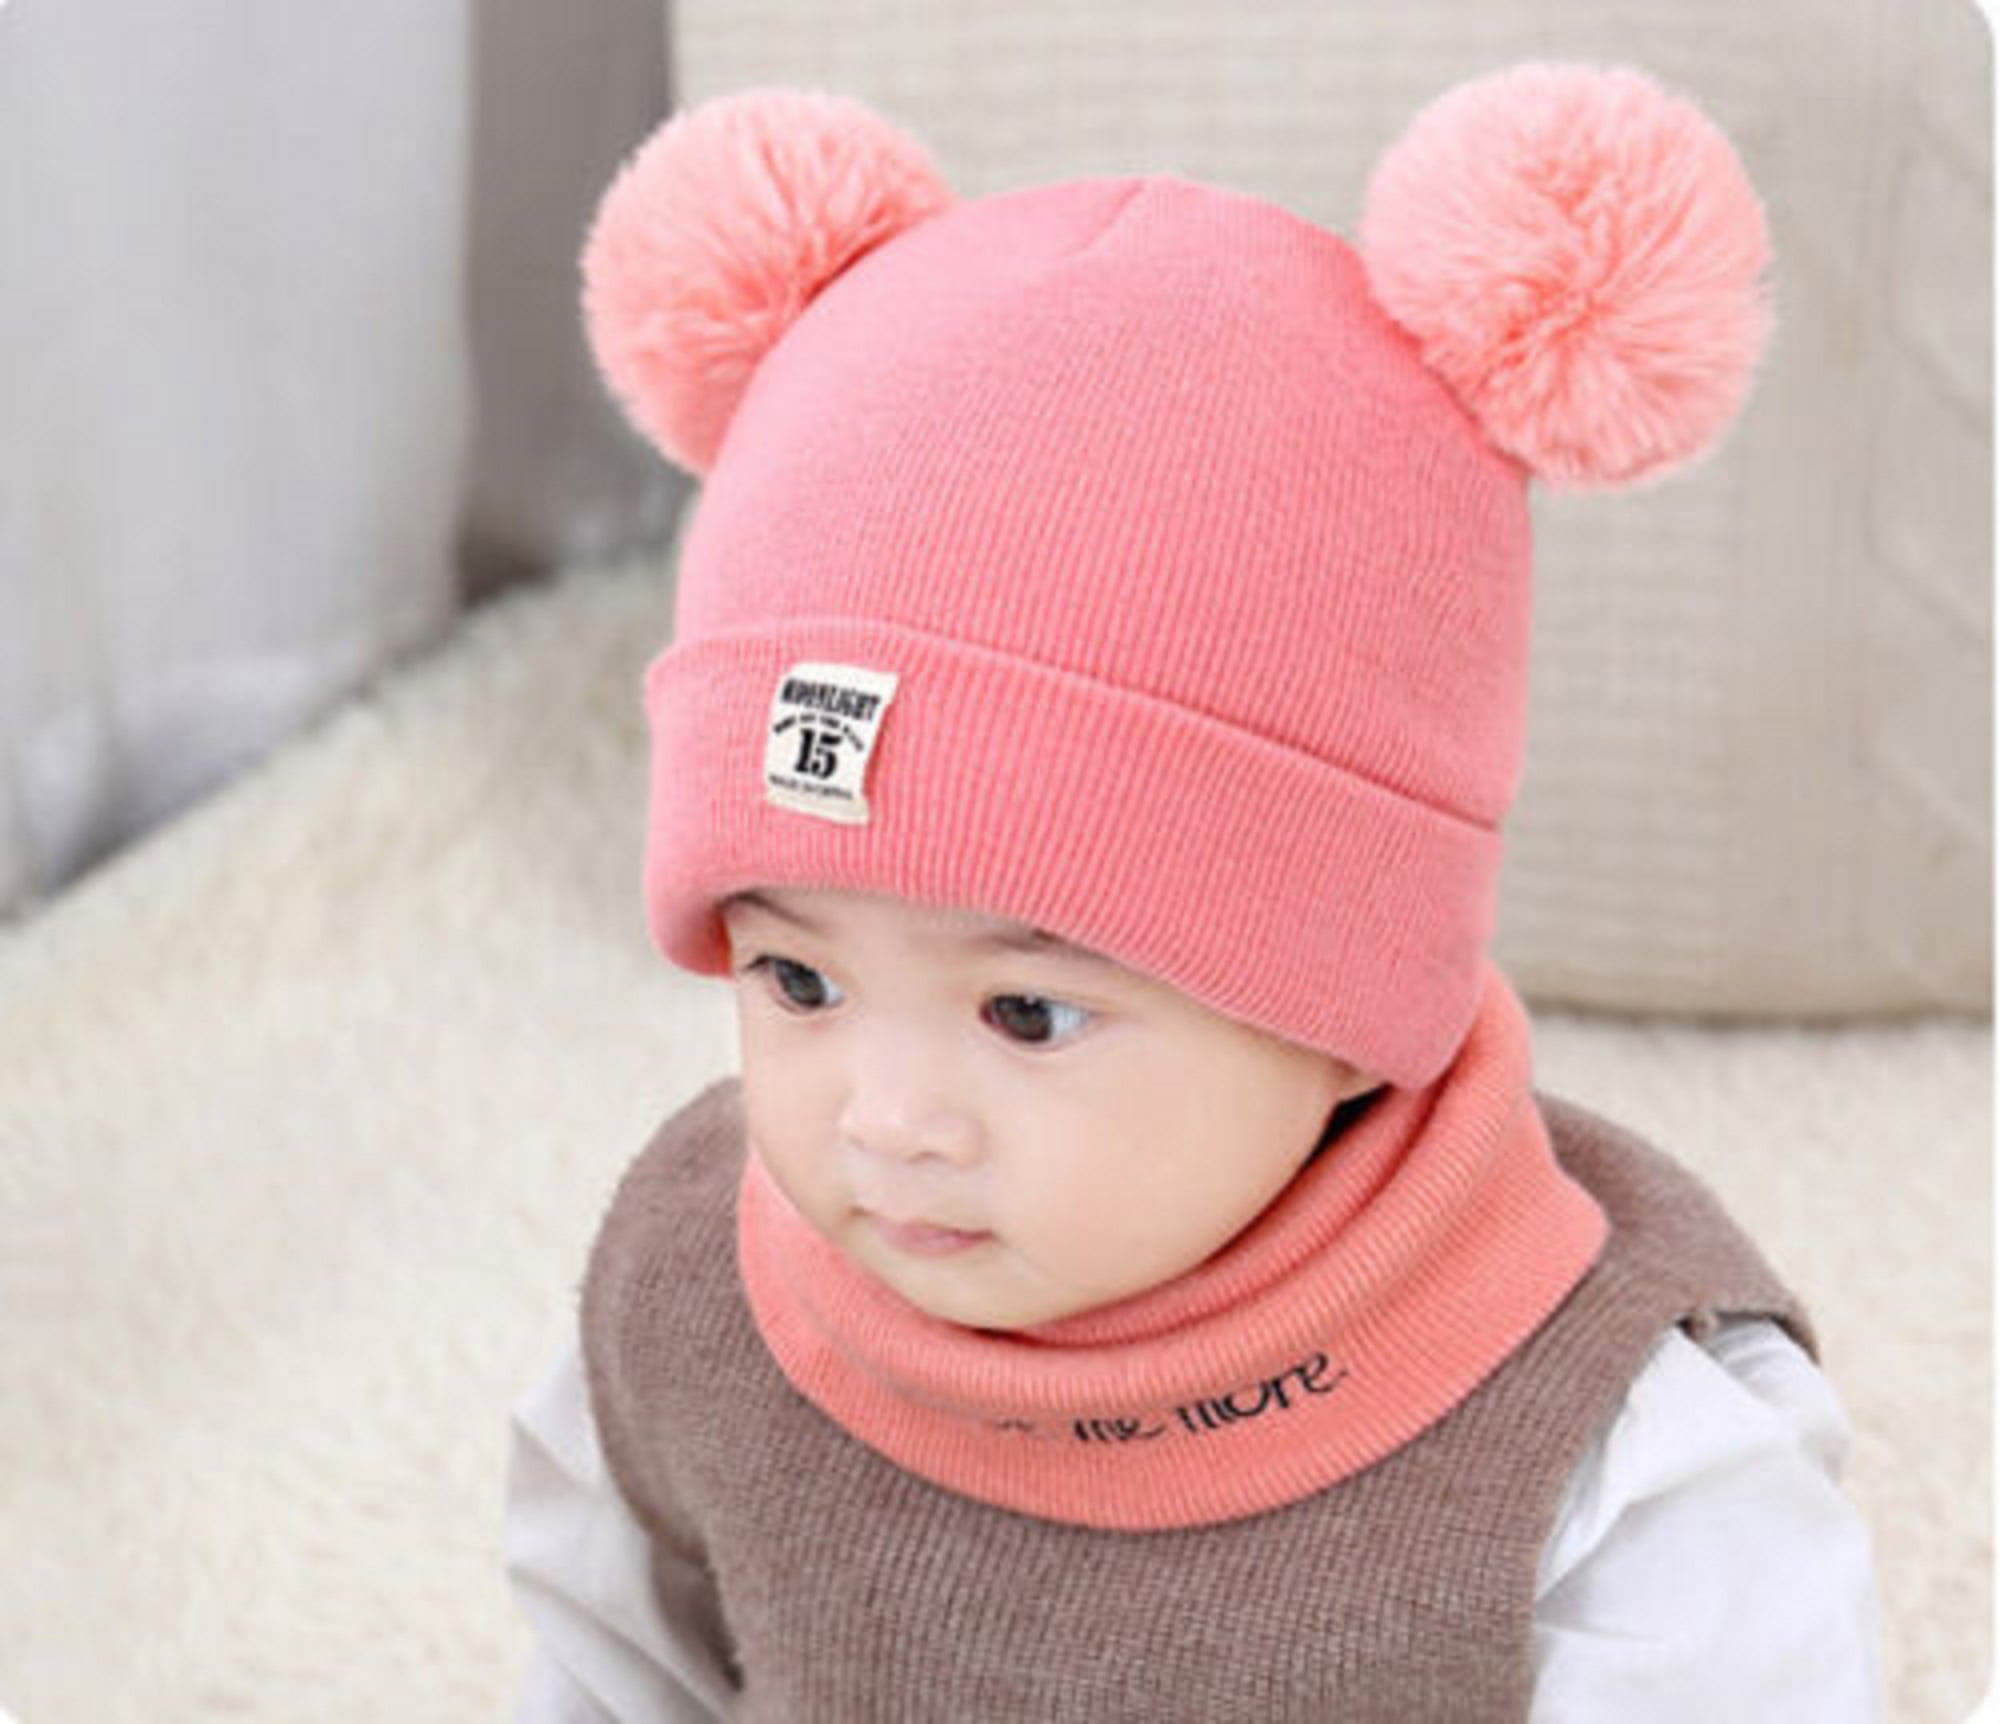 Toddler Kids Baby Boy Girl Fur Pom Hat Winter Warm Knit Bobbles Beanie Cap Scarf